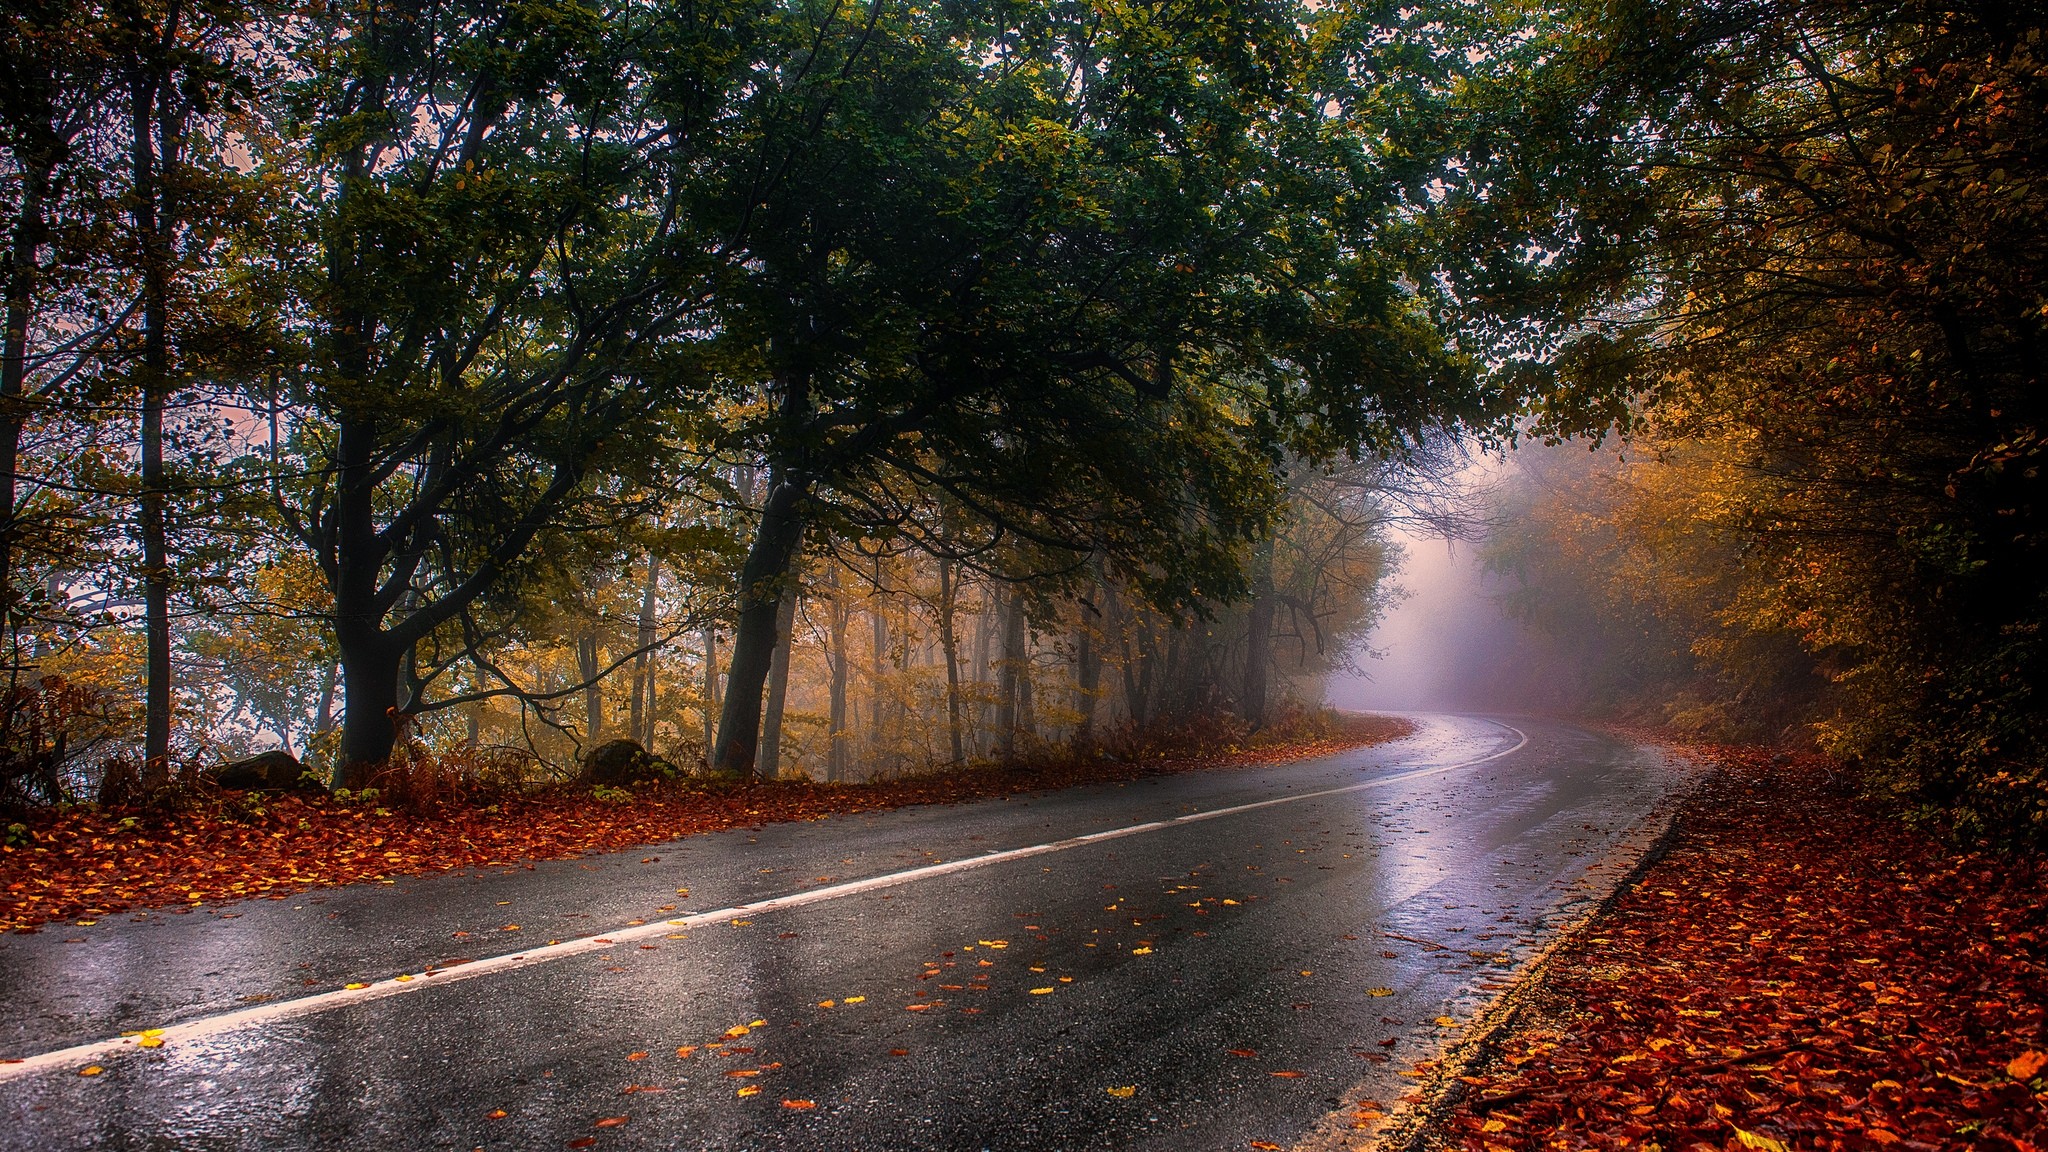 General 2048x1152 nature photography landscape wet fall road mist trees leaves asphalt forest Greece